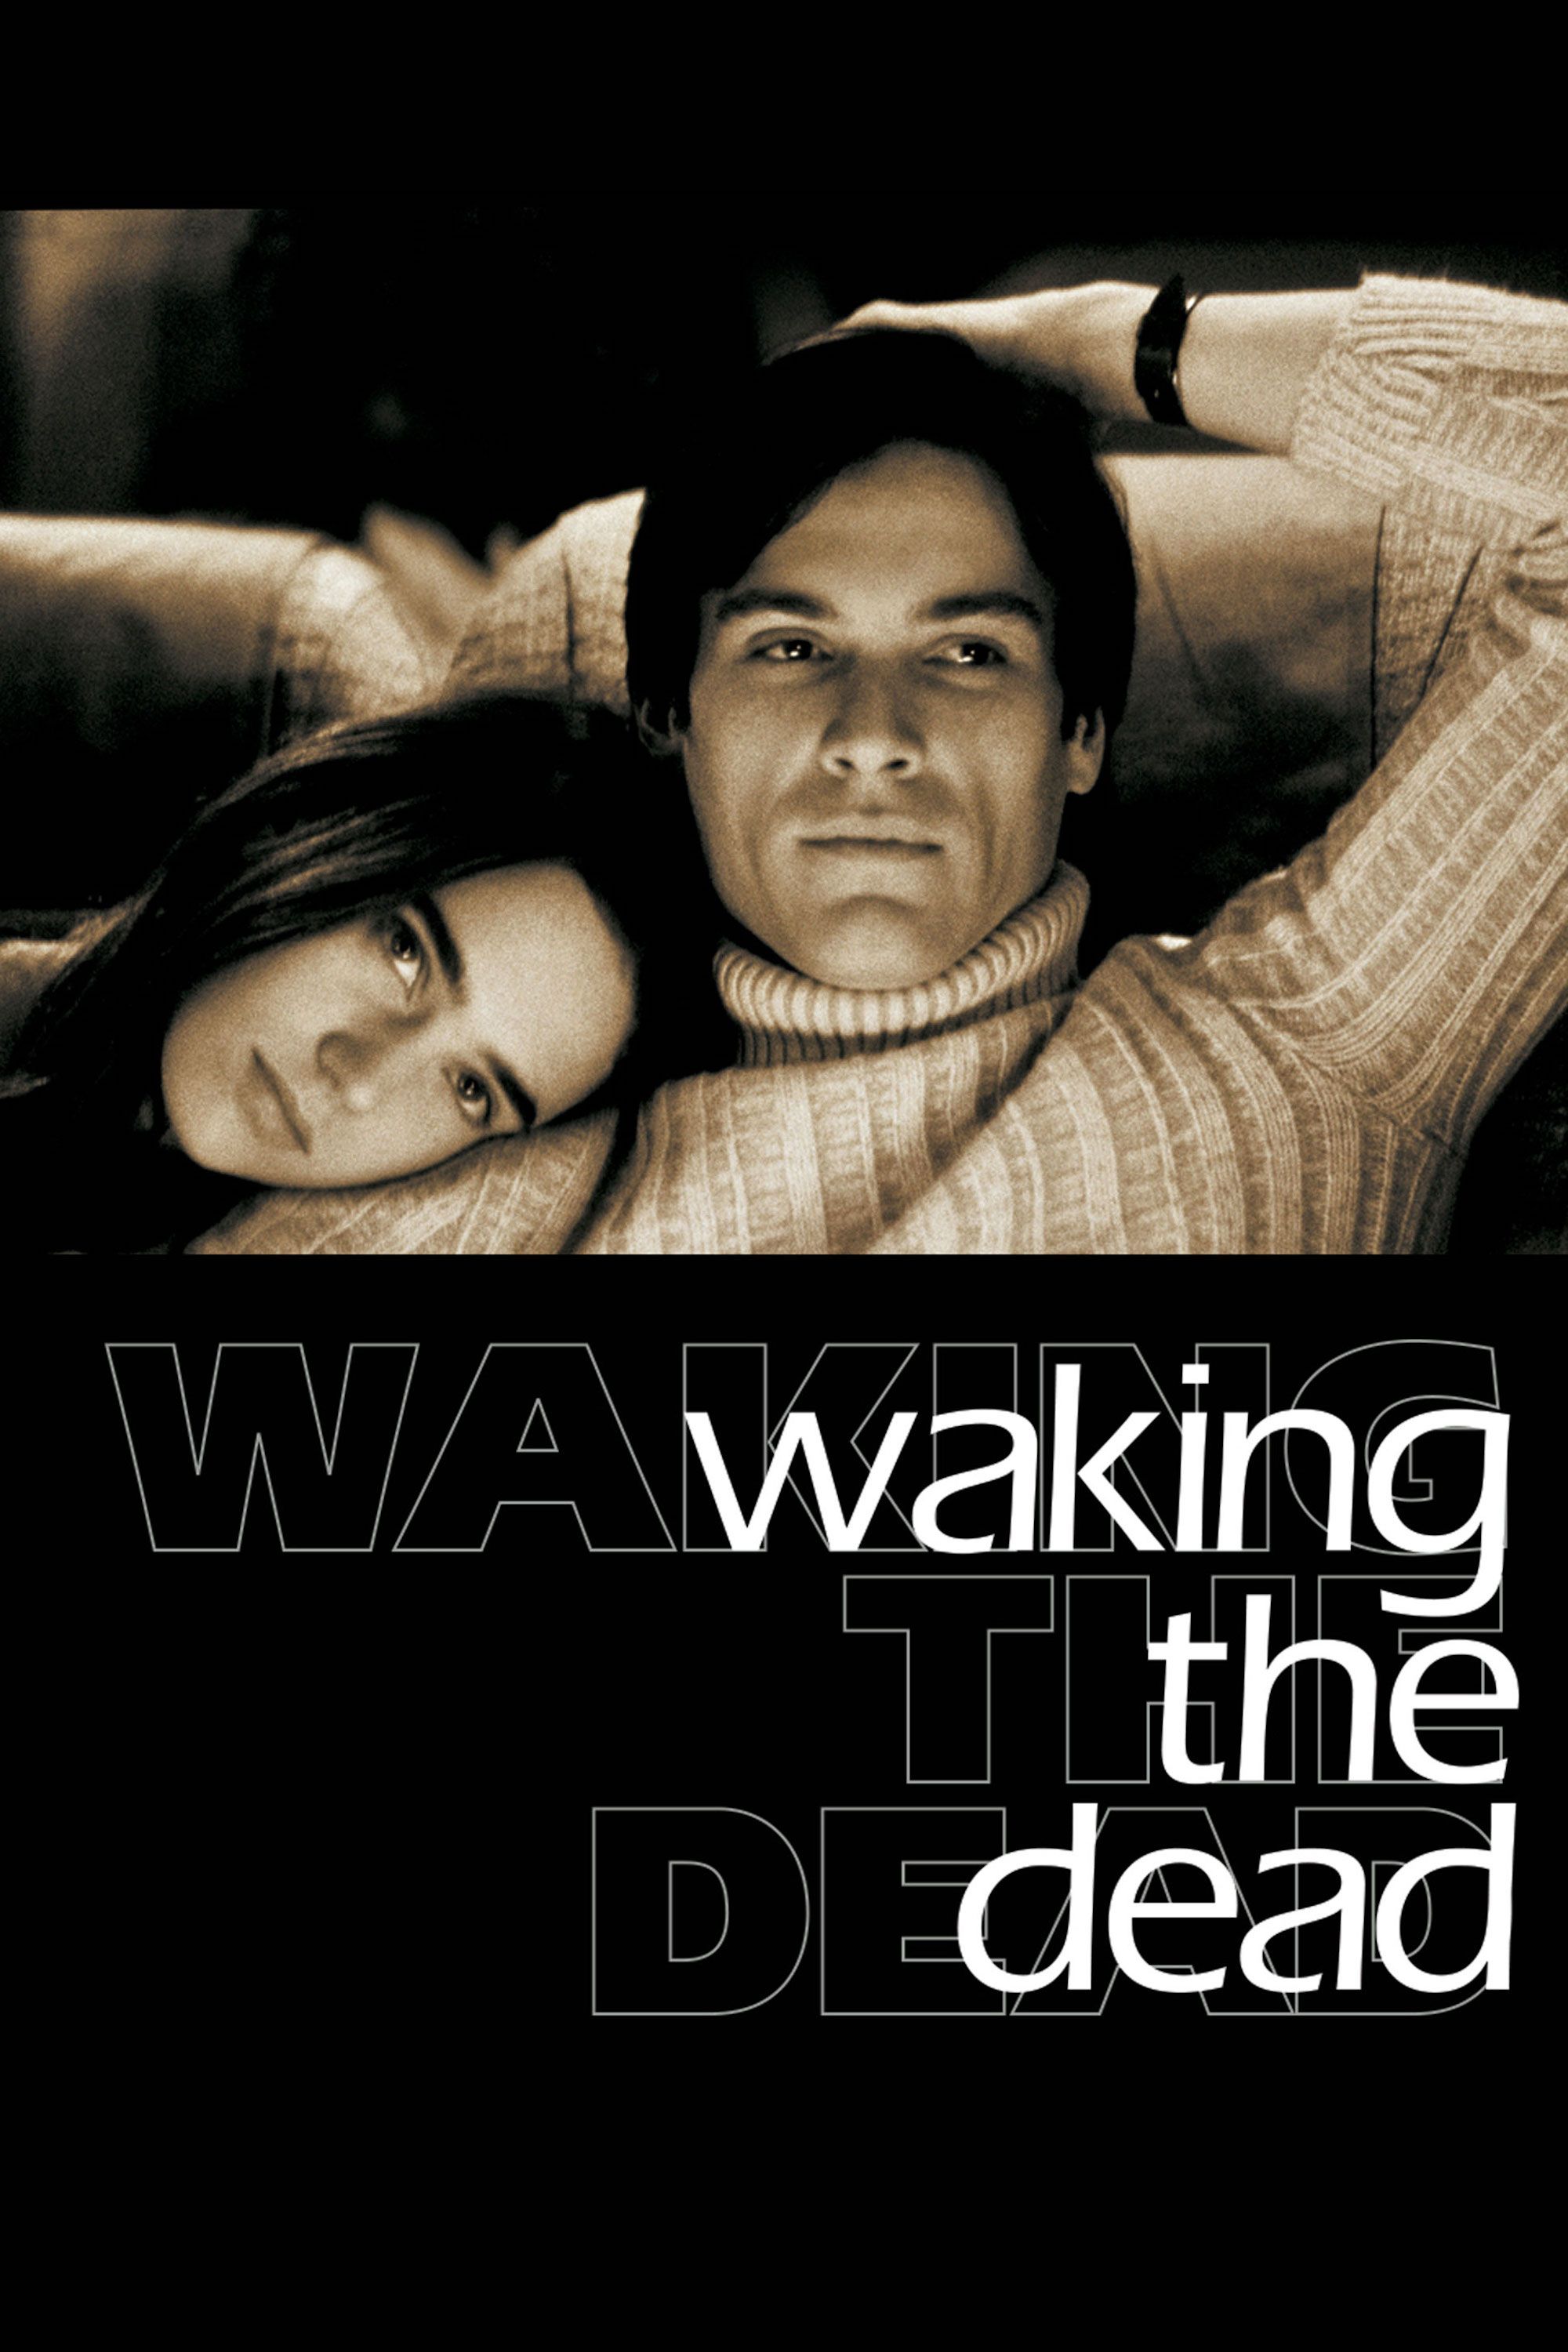 Waking the dead full movie online